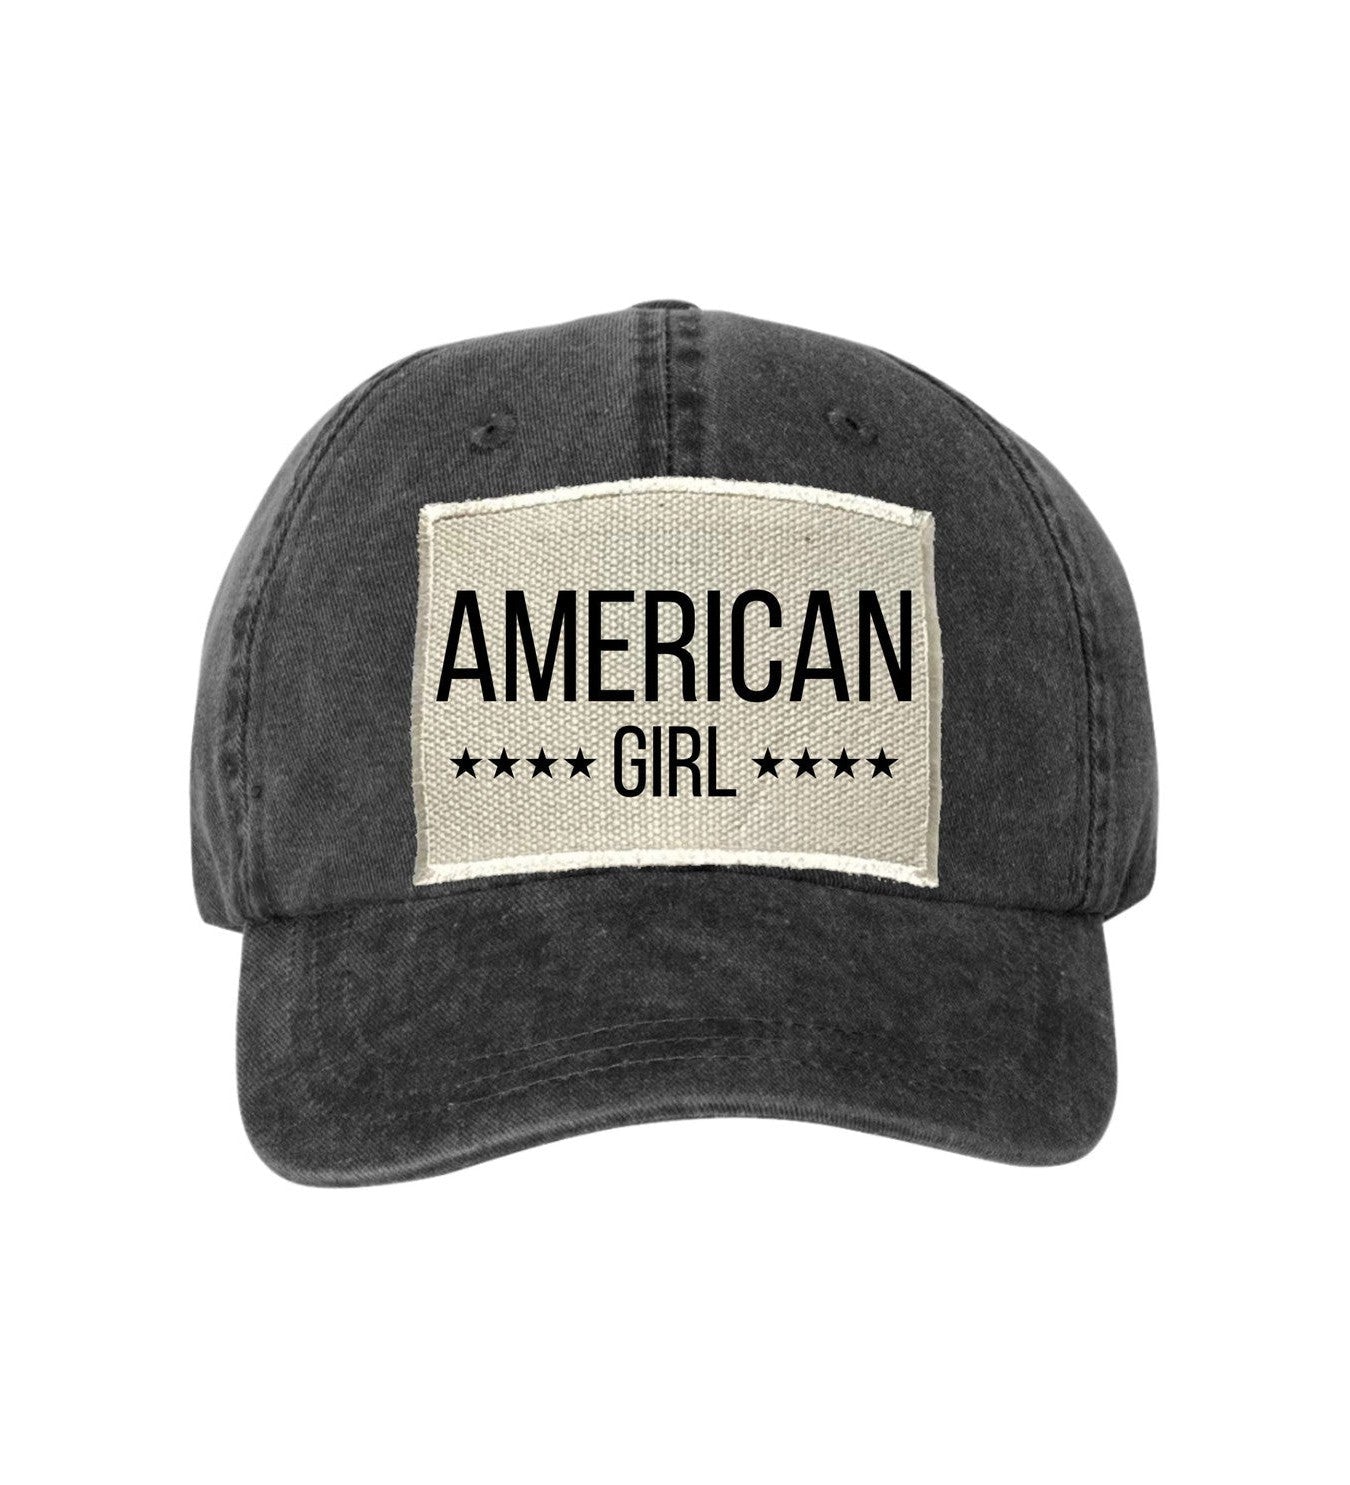 American Girl Ball Cap